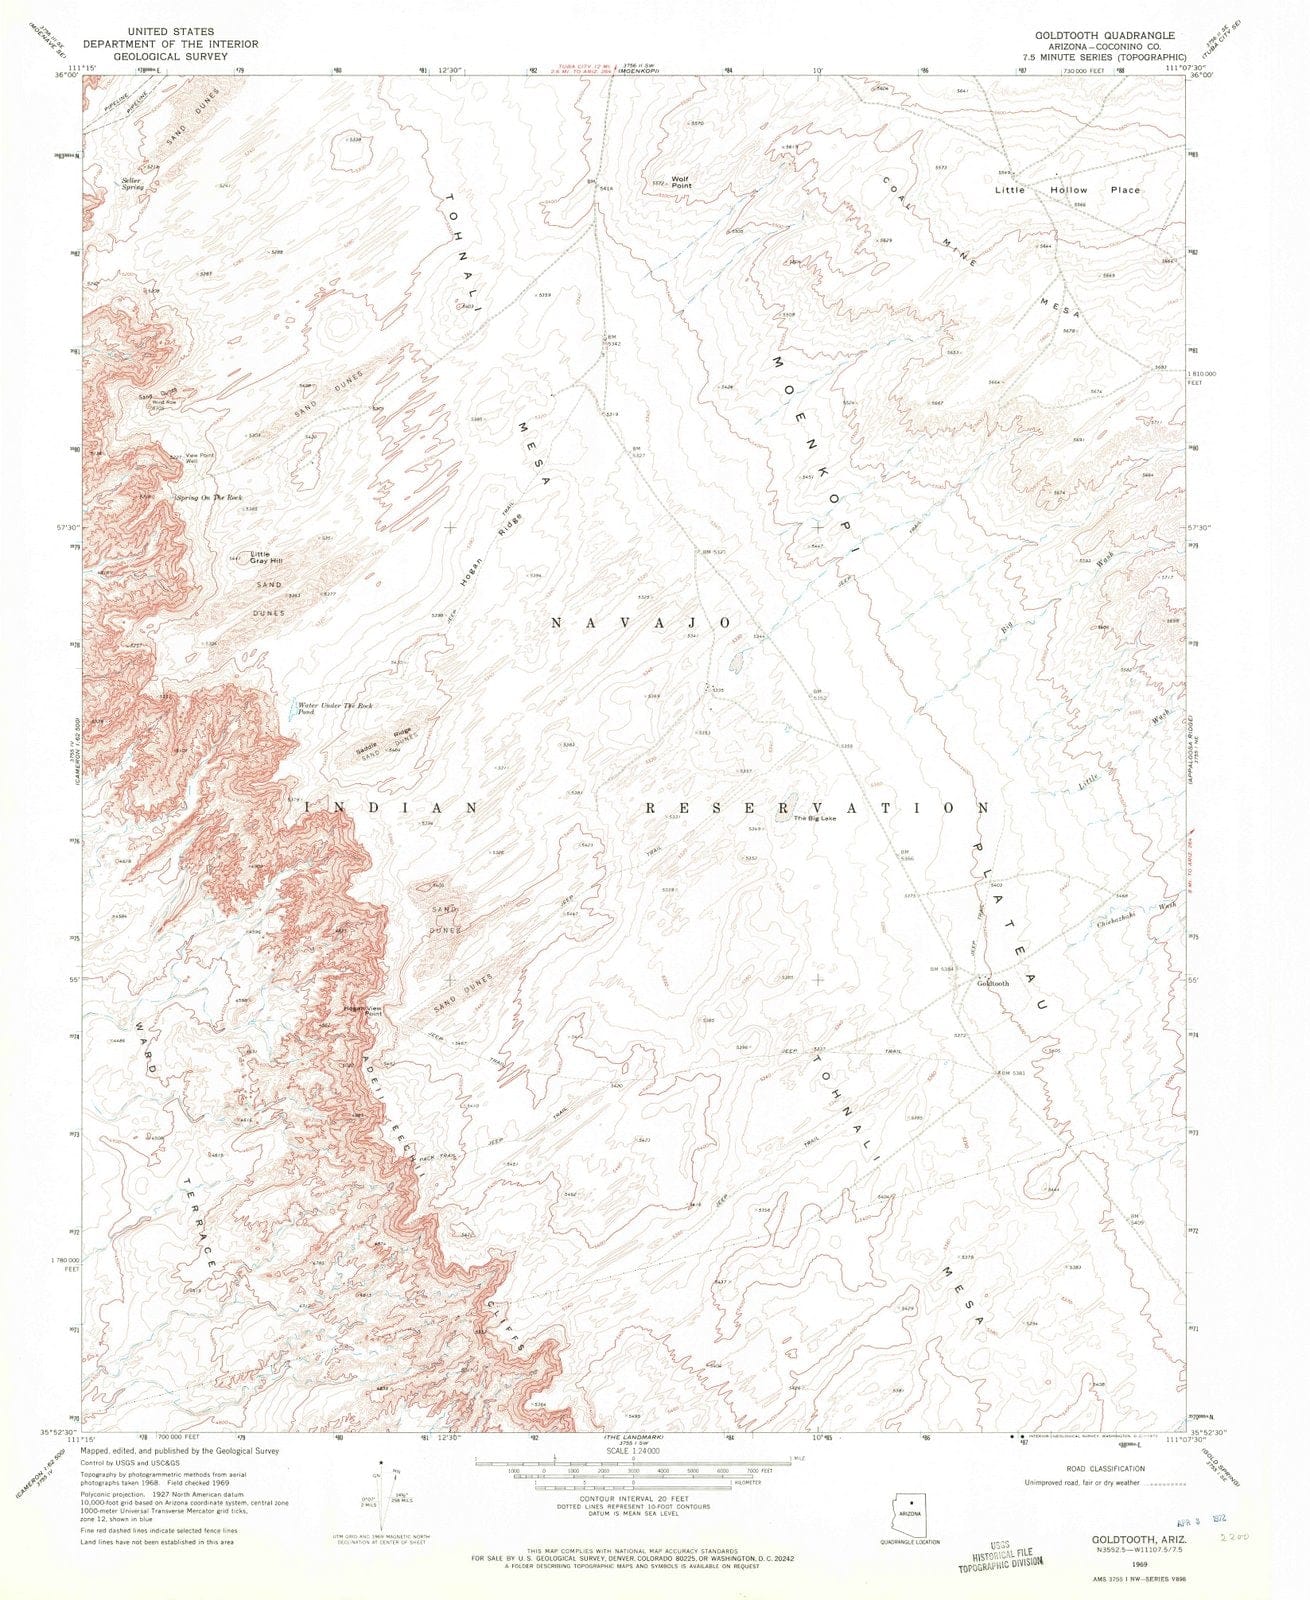 1969 Goldtooth, AZ - Arizona - USGS Topographic Map